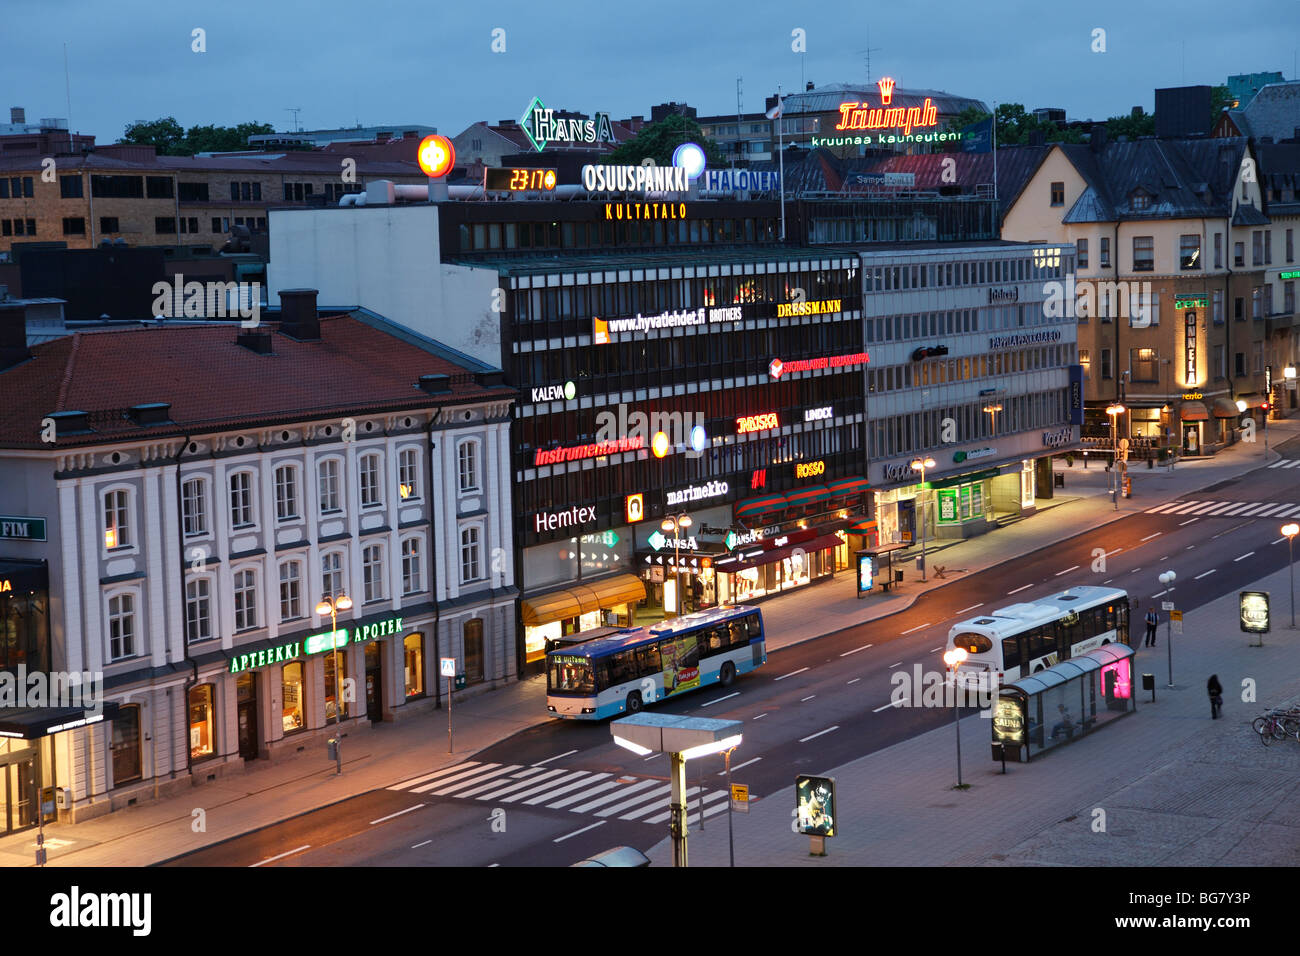 Finland, Region of Finland Proper, Western Finland, Turku, Market Square,  Kauppatori Square, Shops and Buildings Stock Photo - Alamy